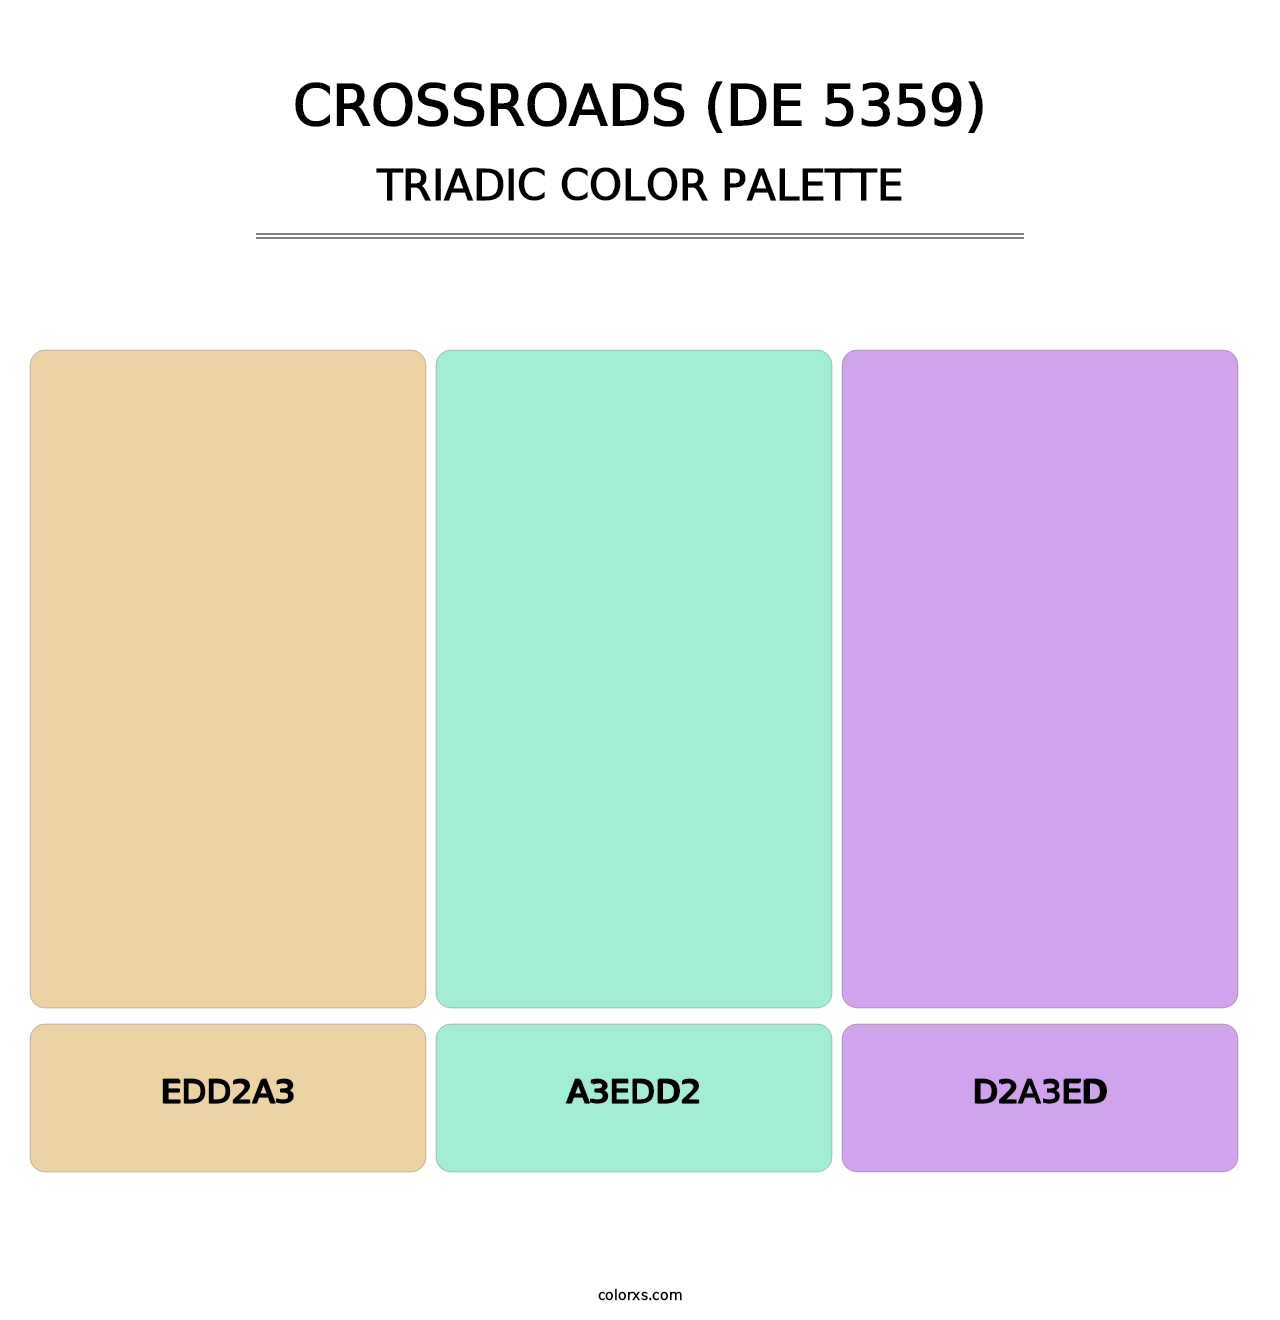 Crossroads (DE 5359) - Triadic Color Palette